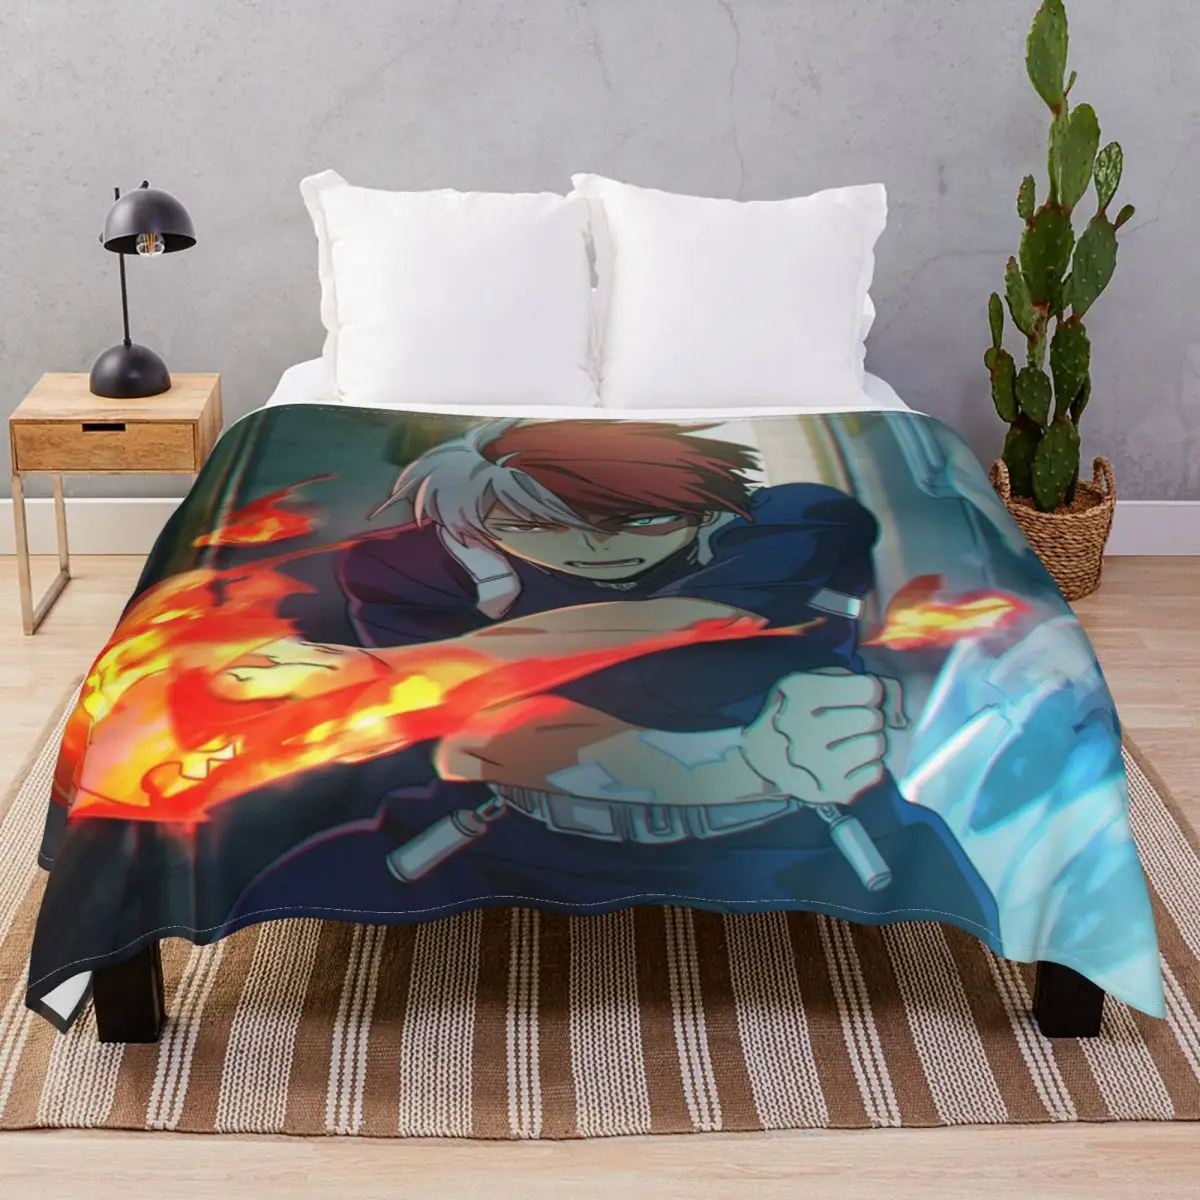 Hero Academia Todoroki Blanket Fleece Summer Ultra-Soft Throw Blankets for Bed Sofa Camp Office